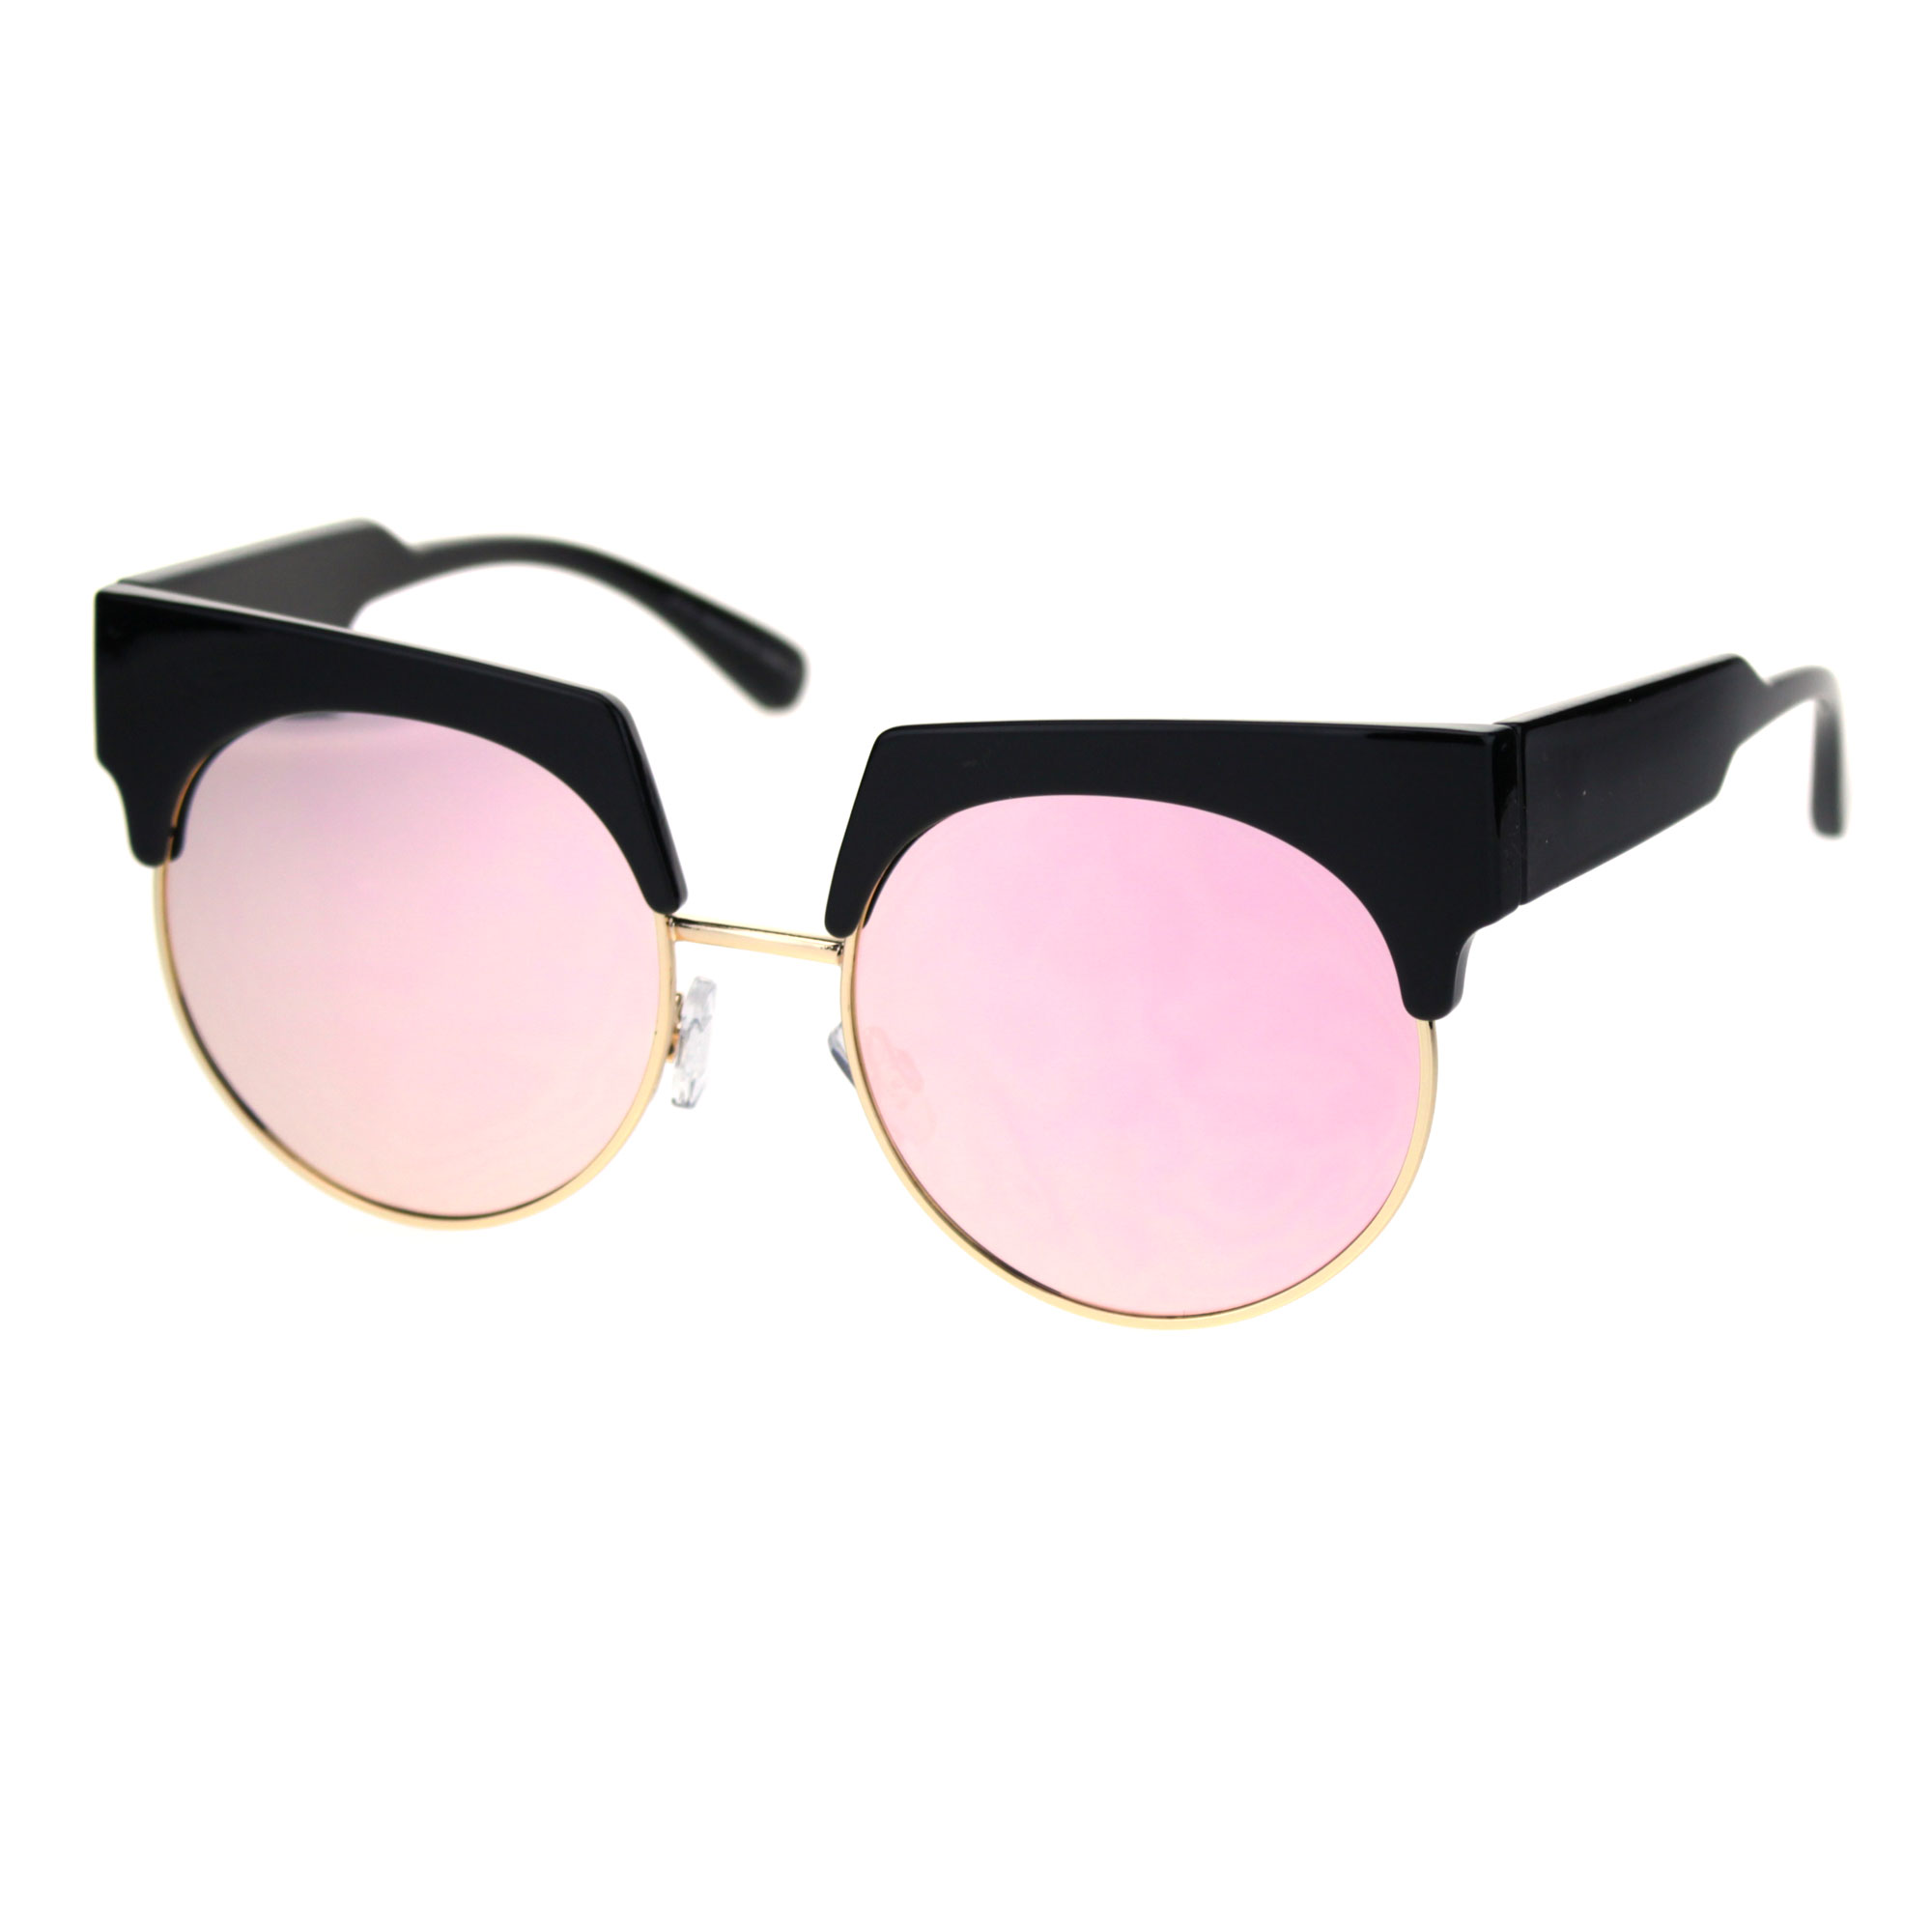 Womens Half Rim Eyebrow Horn Round Retro Sunglasses Black Gold Pink Mirror - image 2 of 4